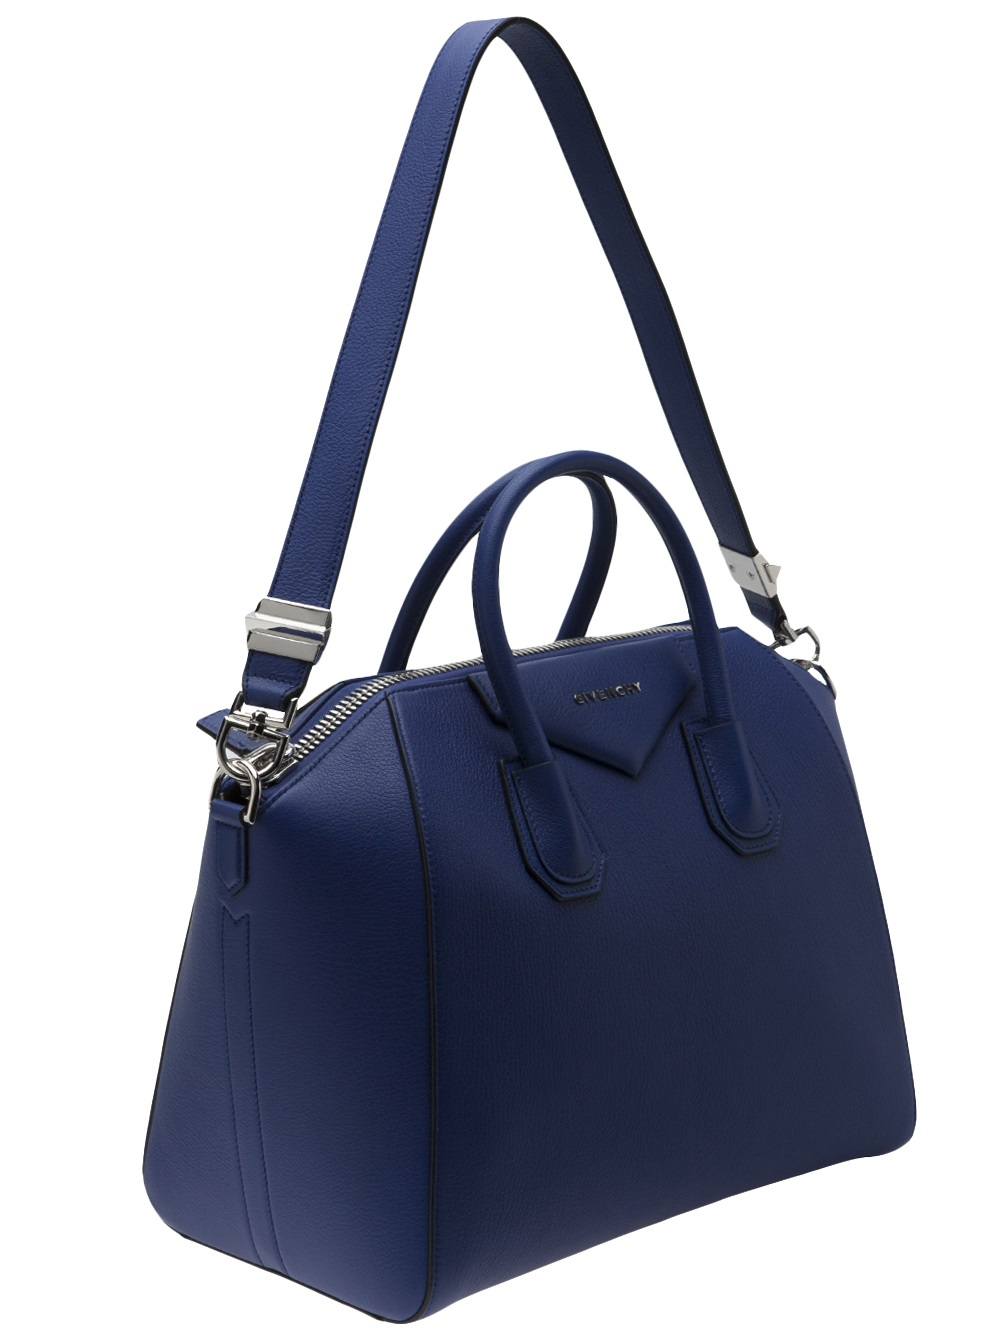 Givenchy Antigona Medium Bag in Blue | Lyst